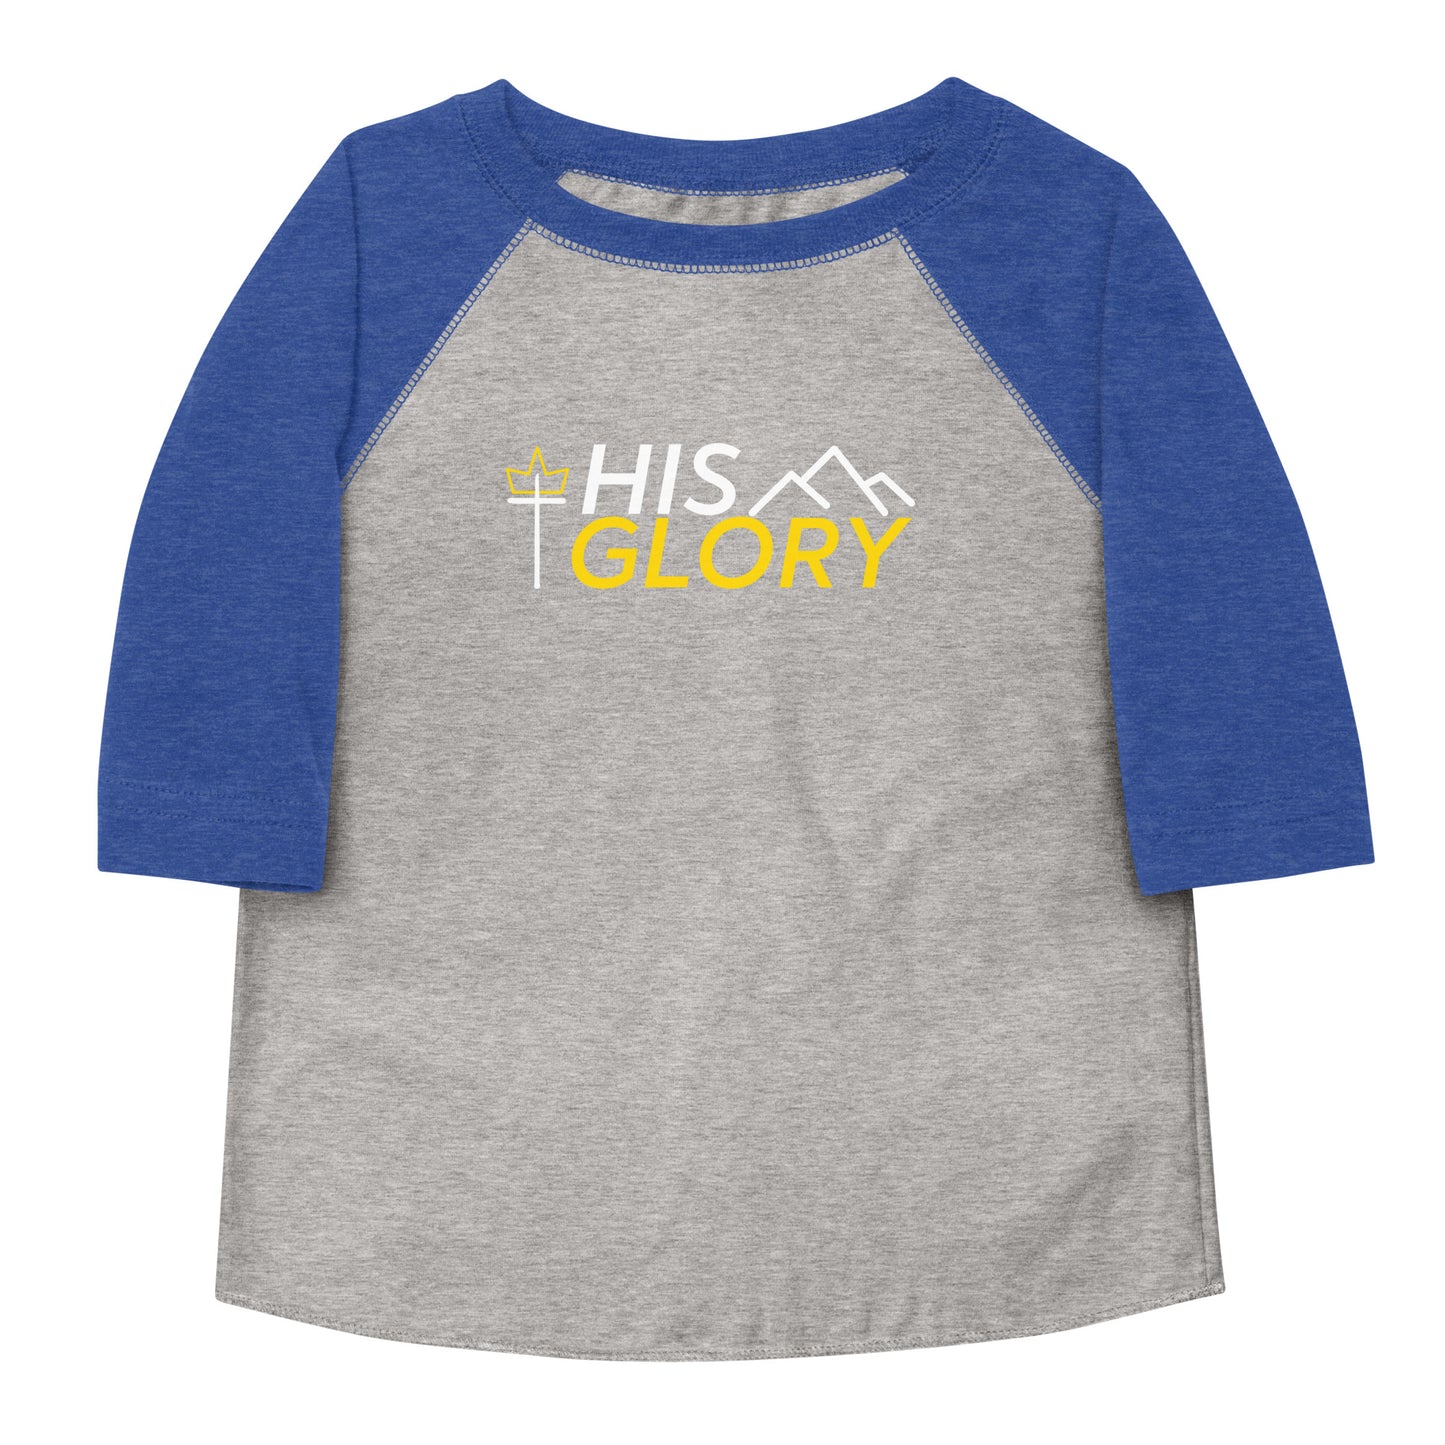 His Glory Co. - NEW - Toddler baseball shirt